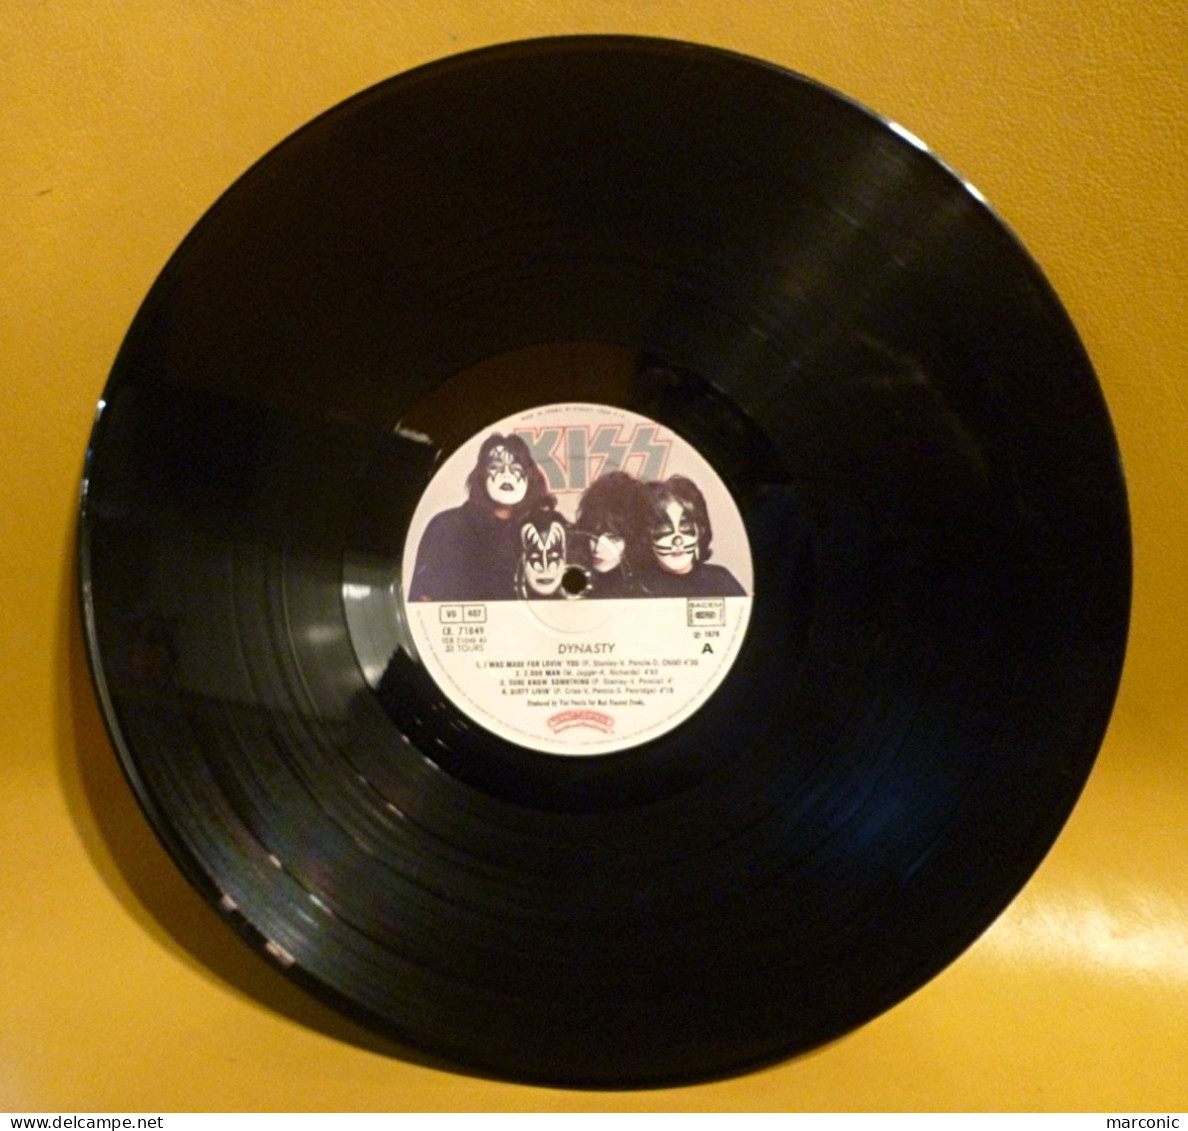 Vinyl - KISS DYNASTY - 1979 - 33 T - Otros - Canción Inglesa